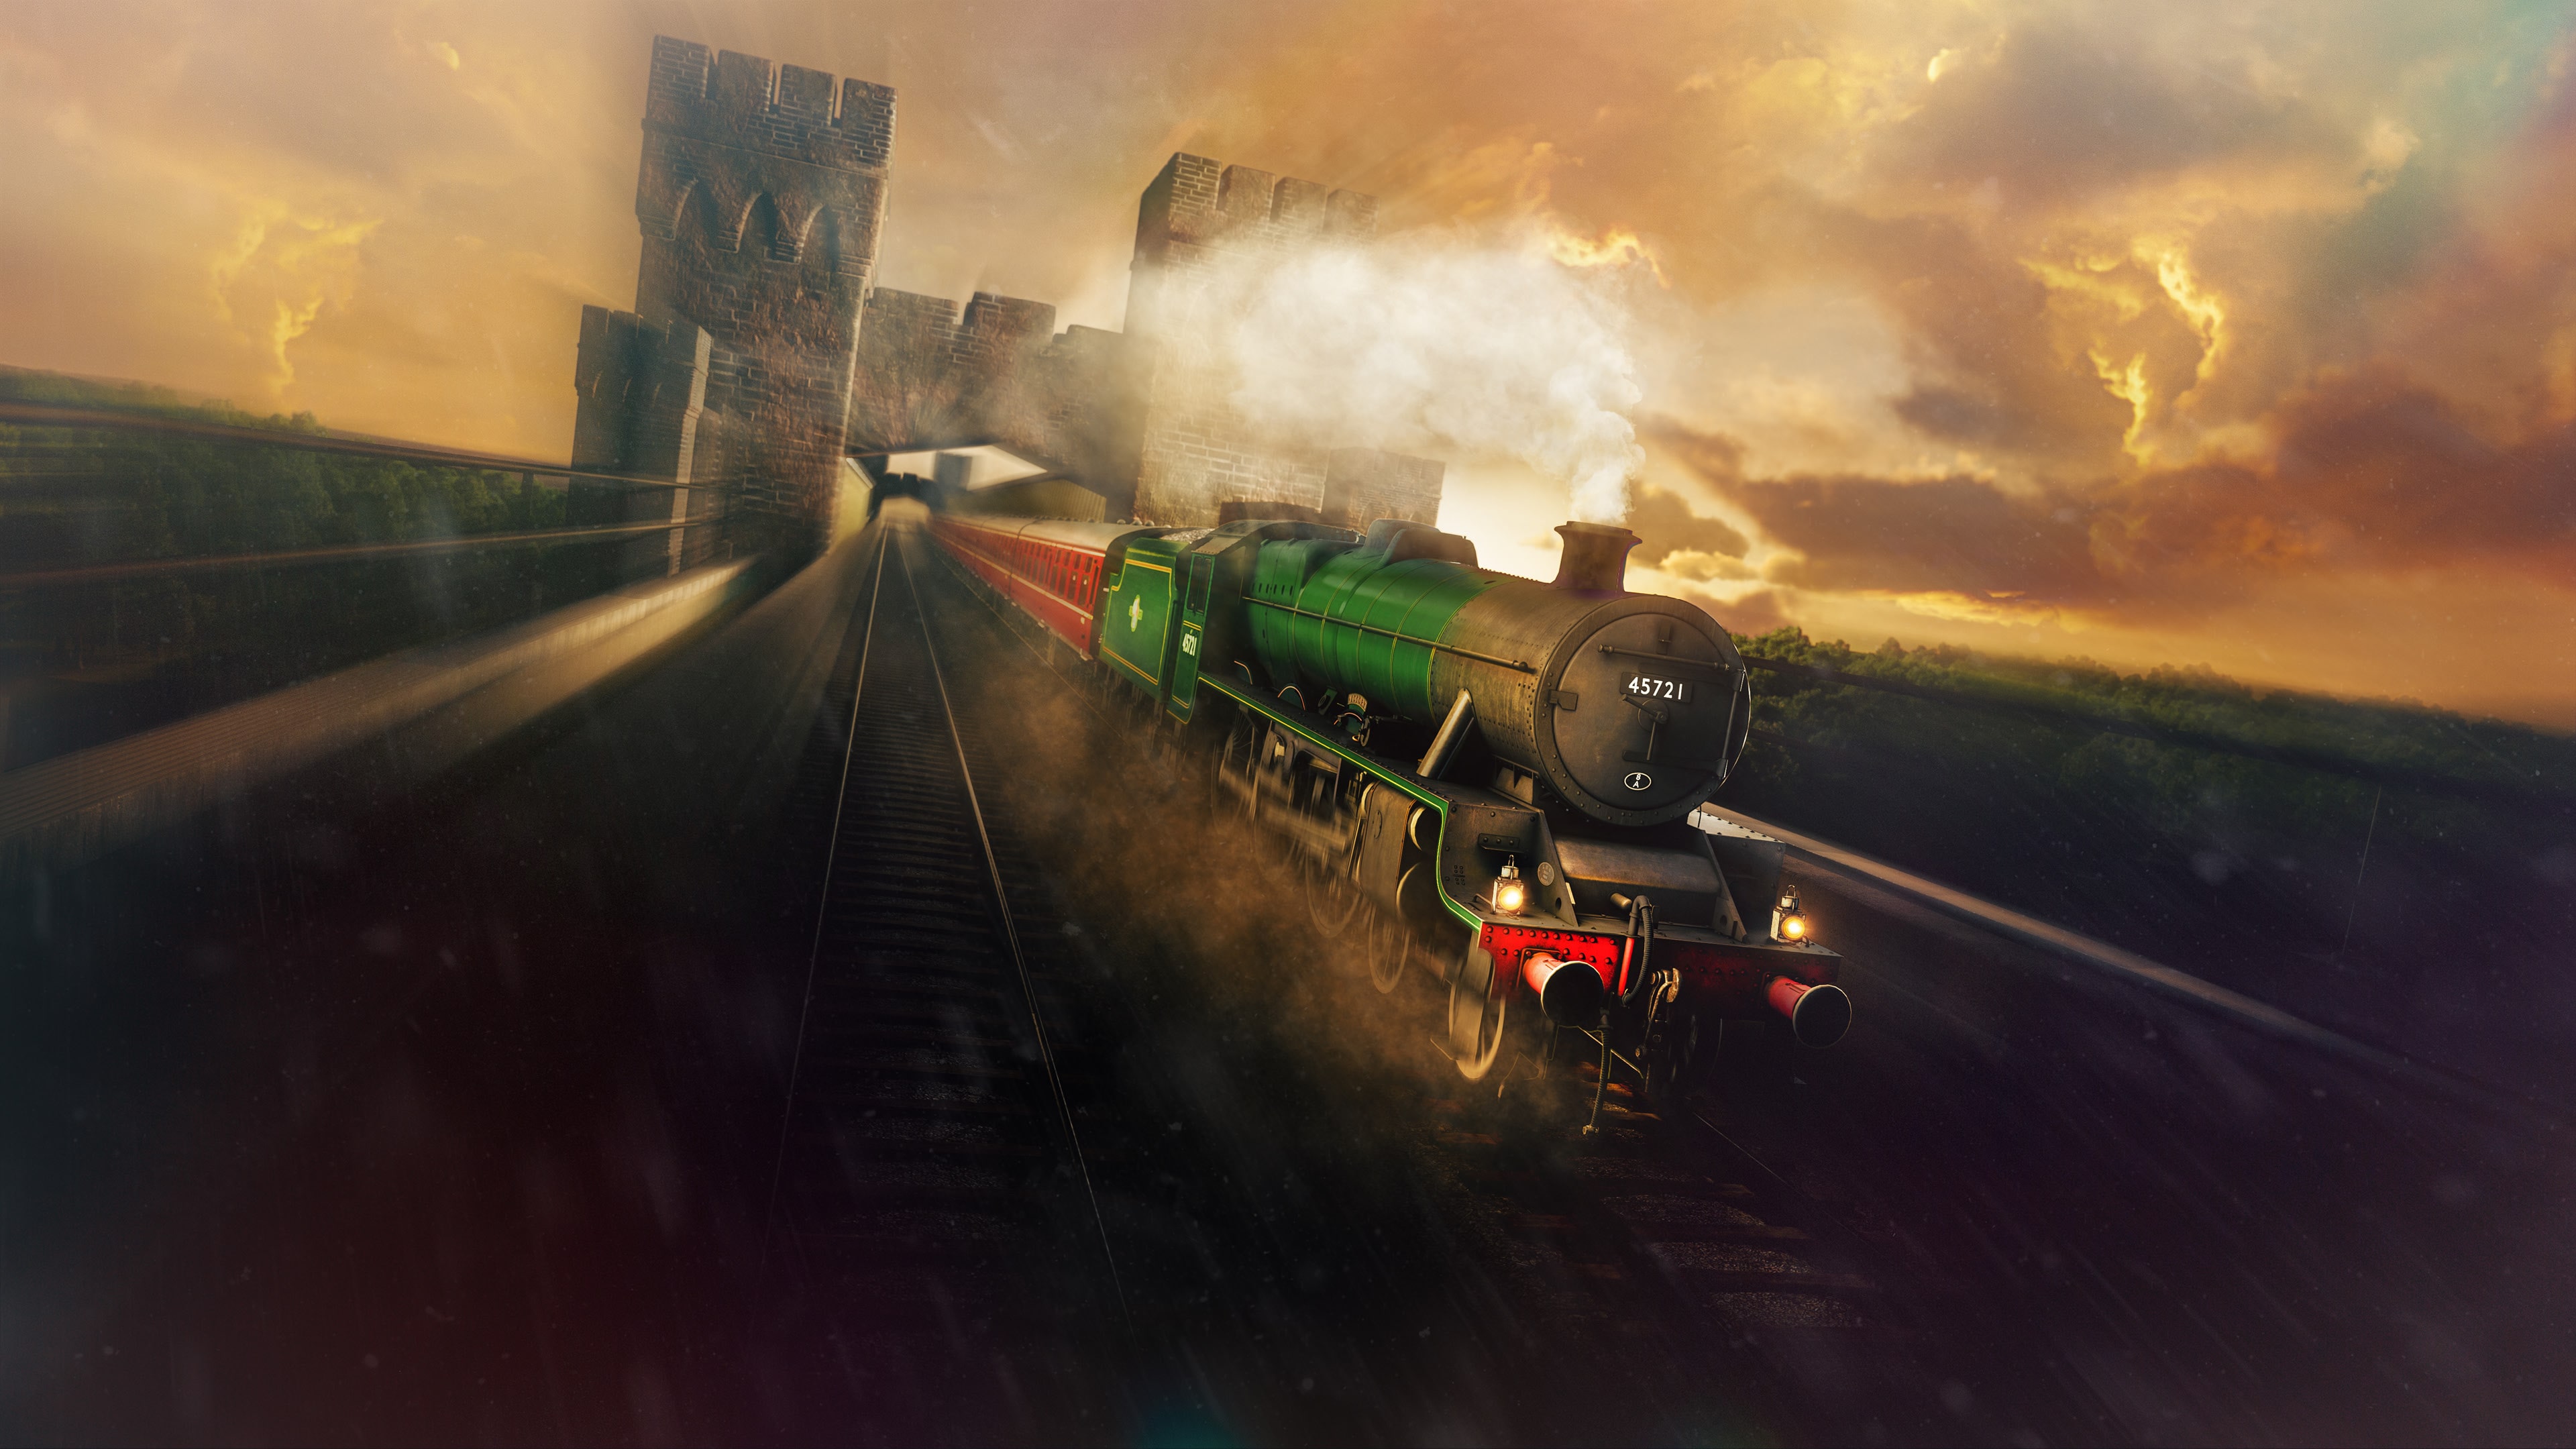 Train Sim World® 3: Spirit of Steam: Liverpool Lime Street - Crewe